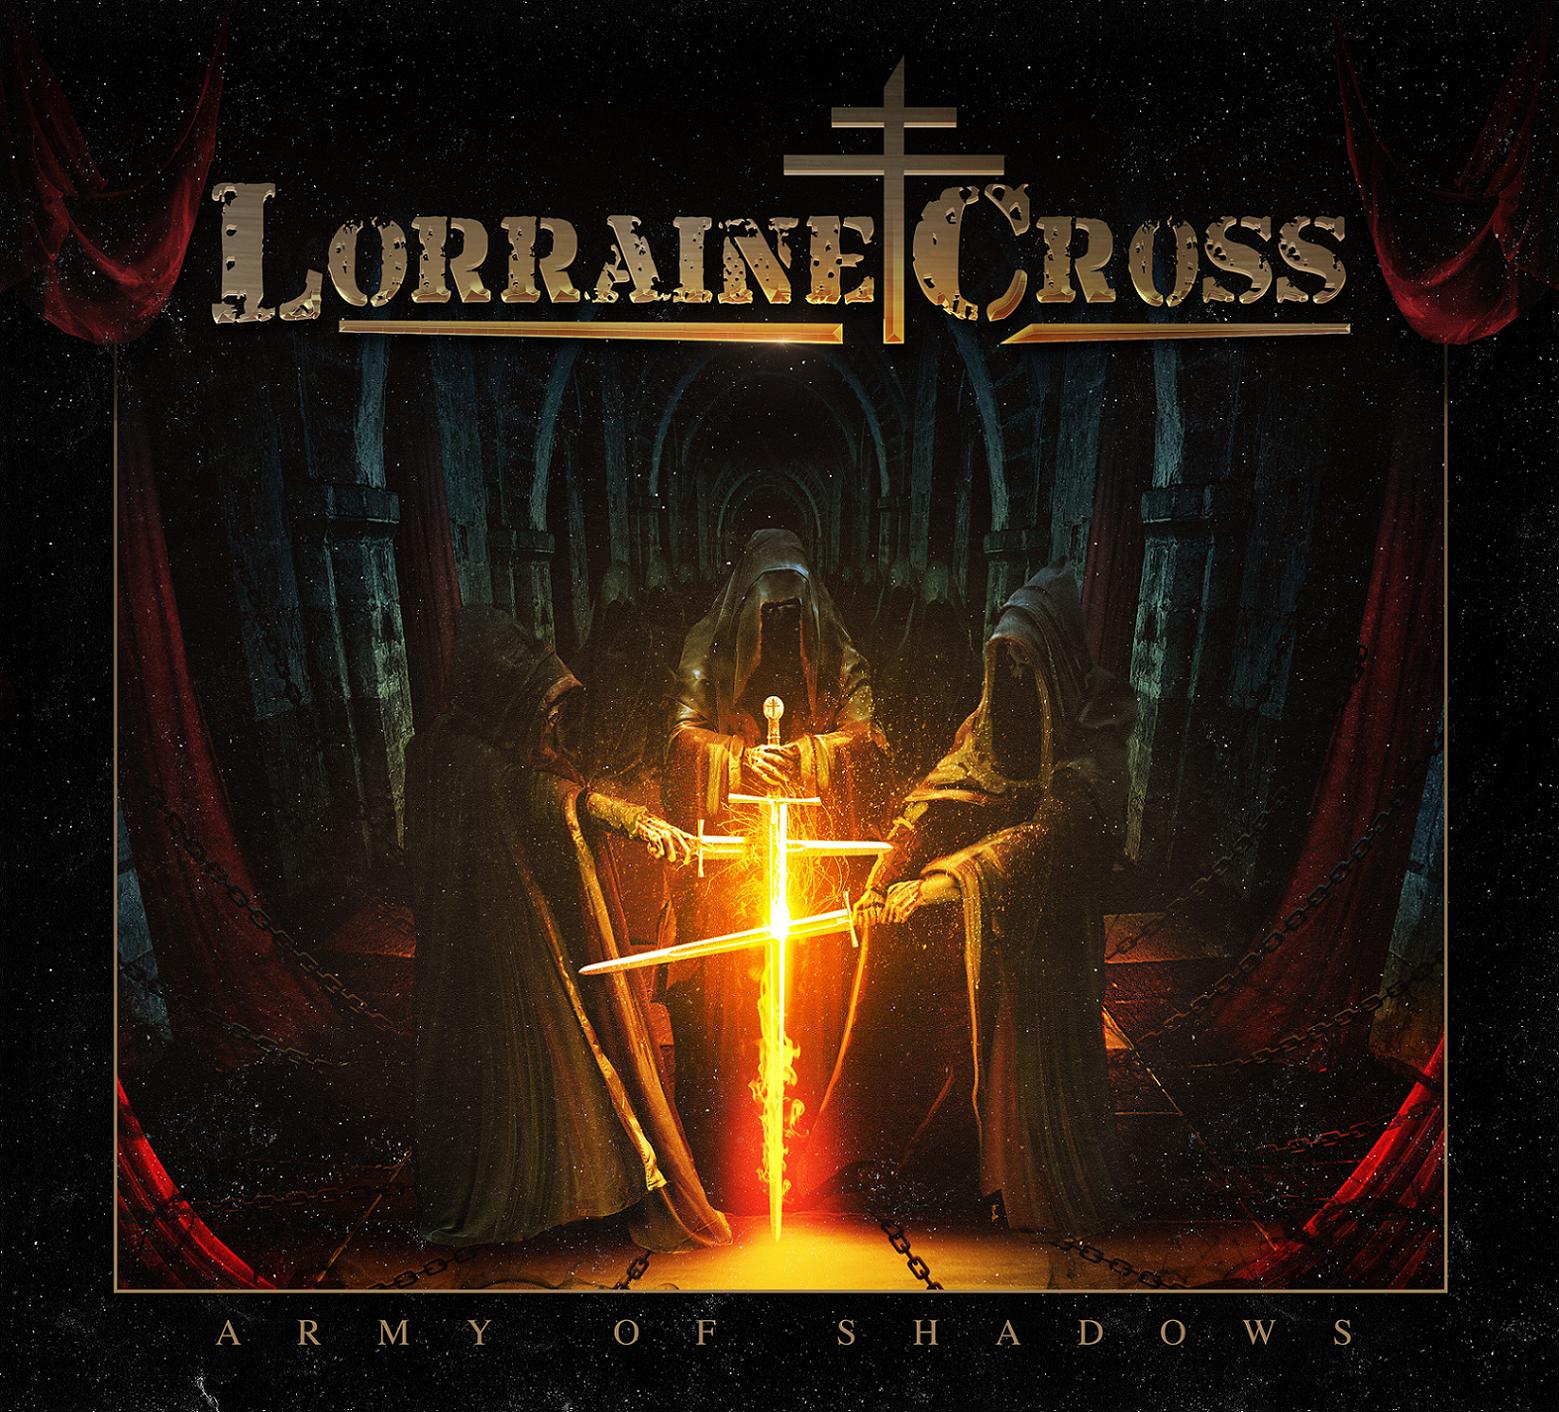 LORRAINE CROSS – Army Of Shadows